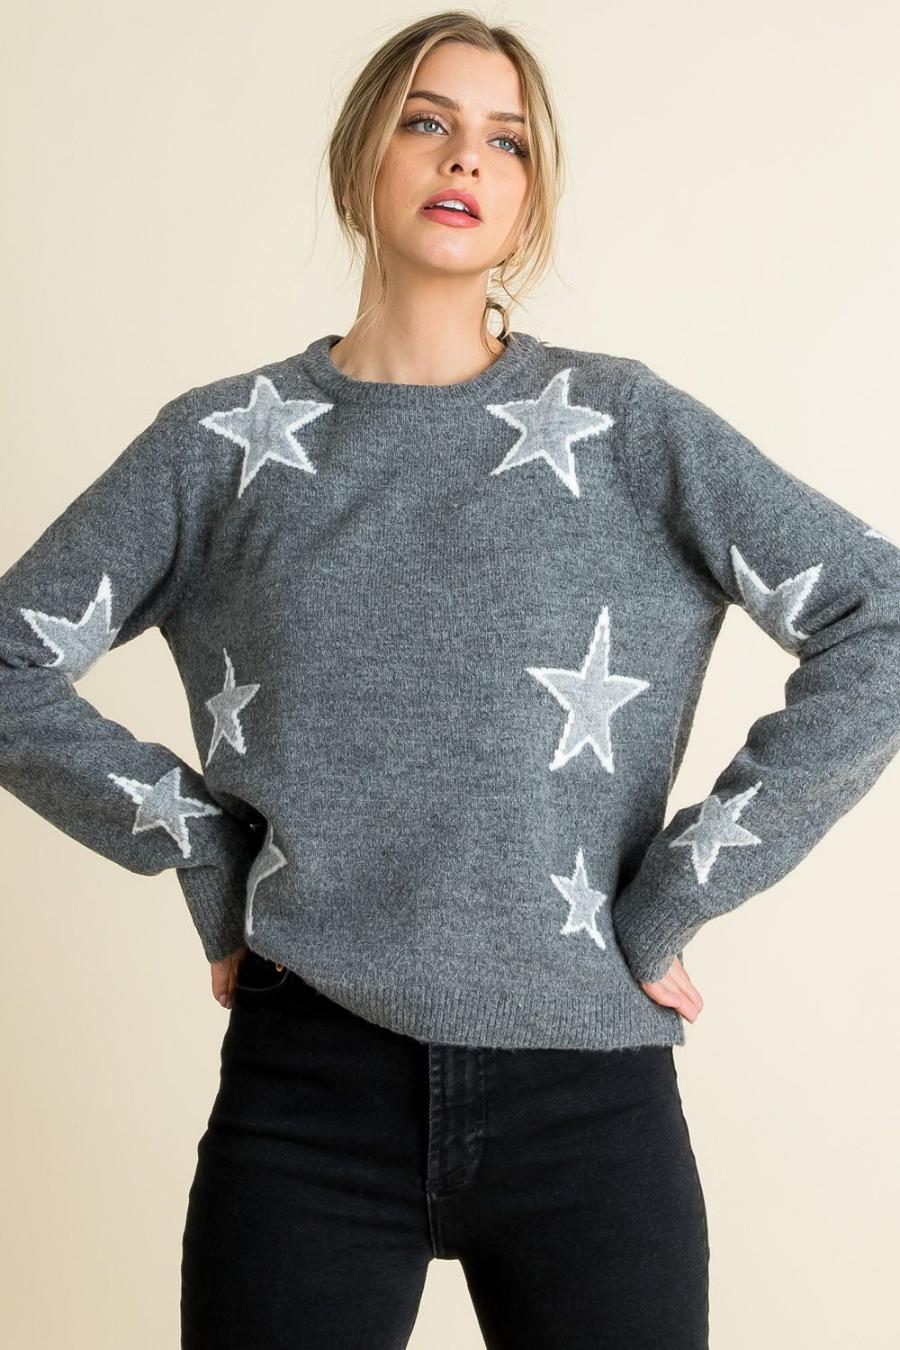 Theme Maren Star Sweater (Grey) Sweaters at Chagrin Saddlery Main